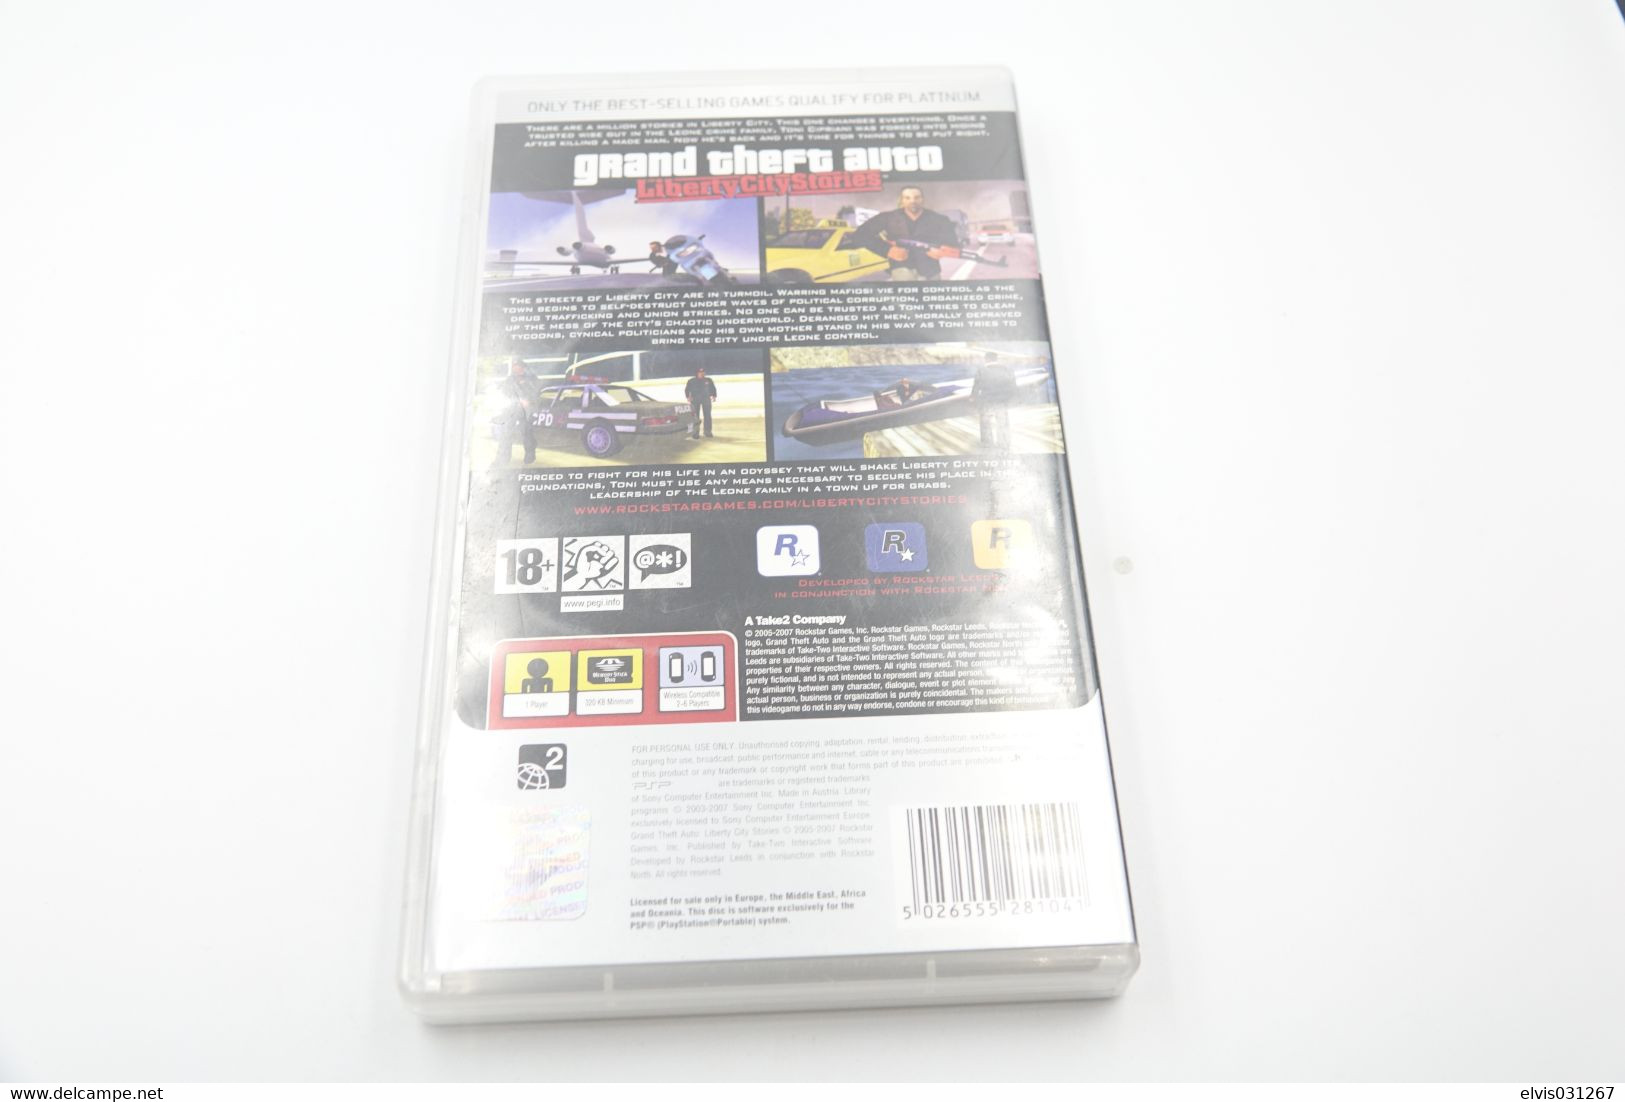 SONY PLAYSTATION PORTABLE PSP : GRAND THEFT AUTO GTA LIBERTY CITY STORIES PLATINUM - ROCKSTAR - PSP